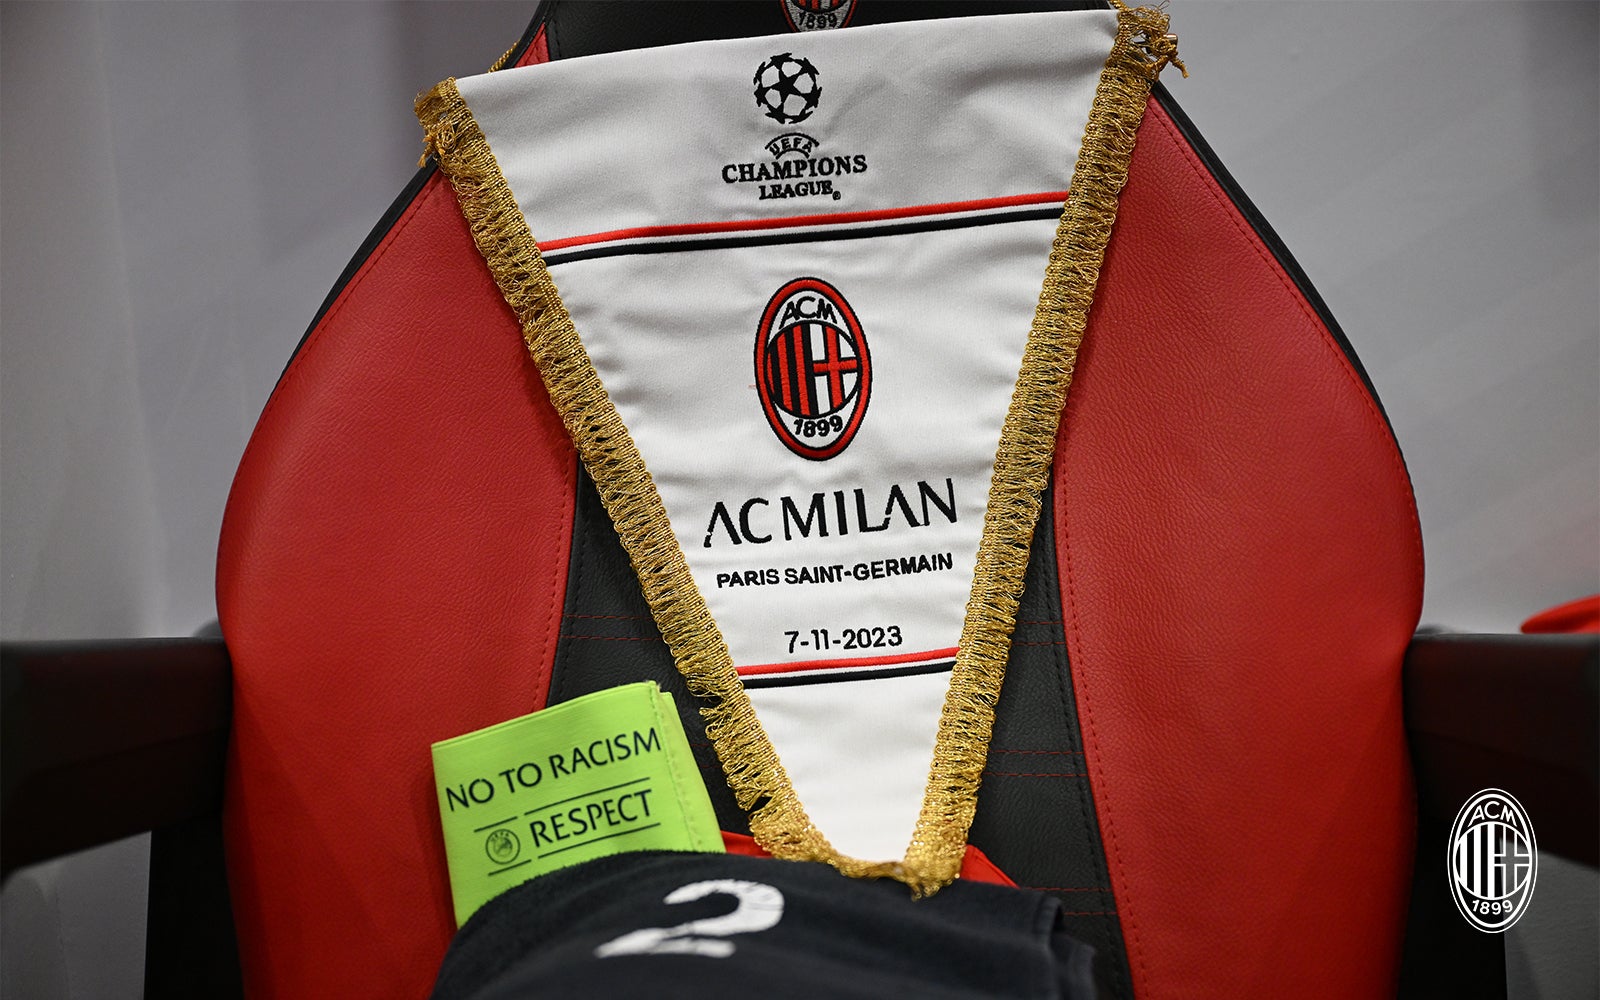 AC Milan 2-1 PSG, UEFA Champions League 2023/24: the match report